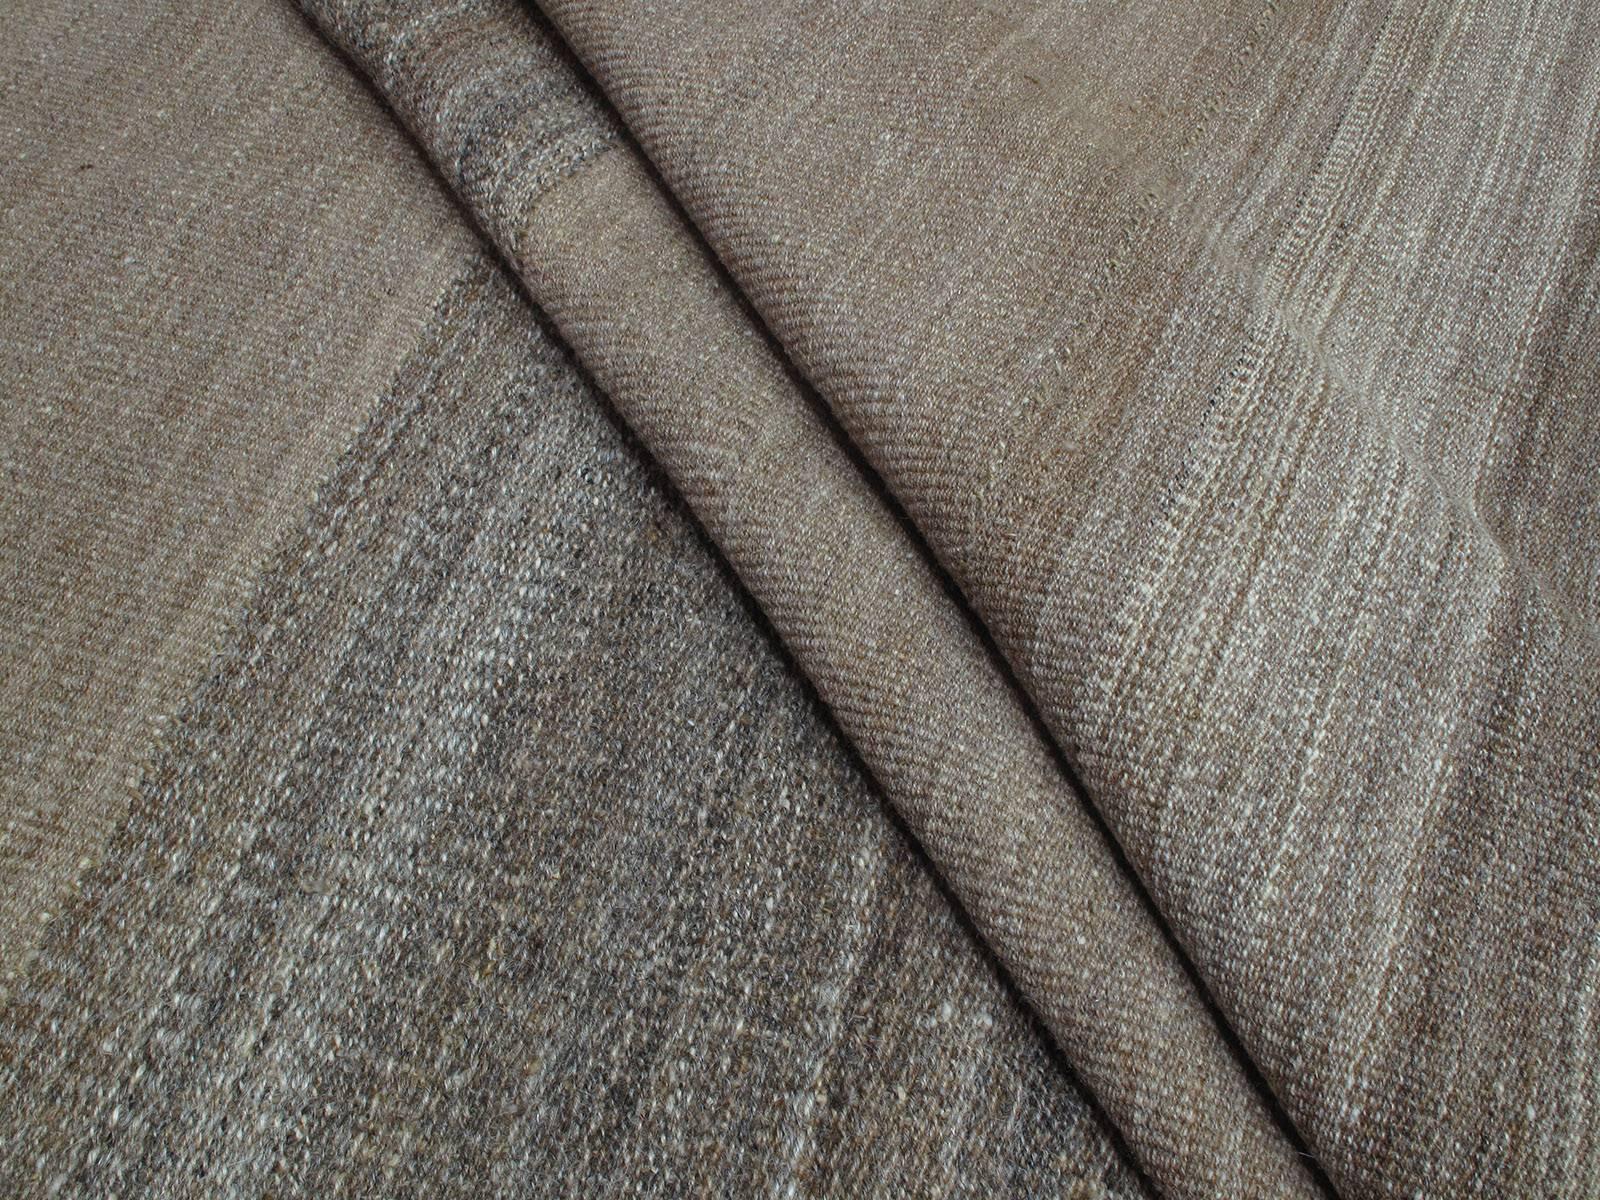 20th Century Large Wool Kilim in Natural Brown